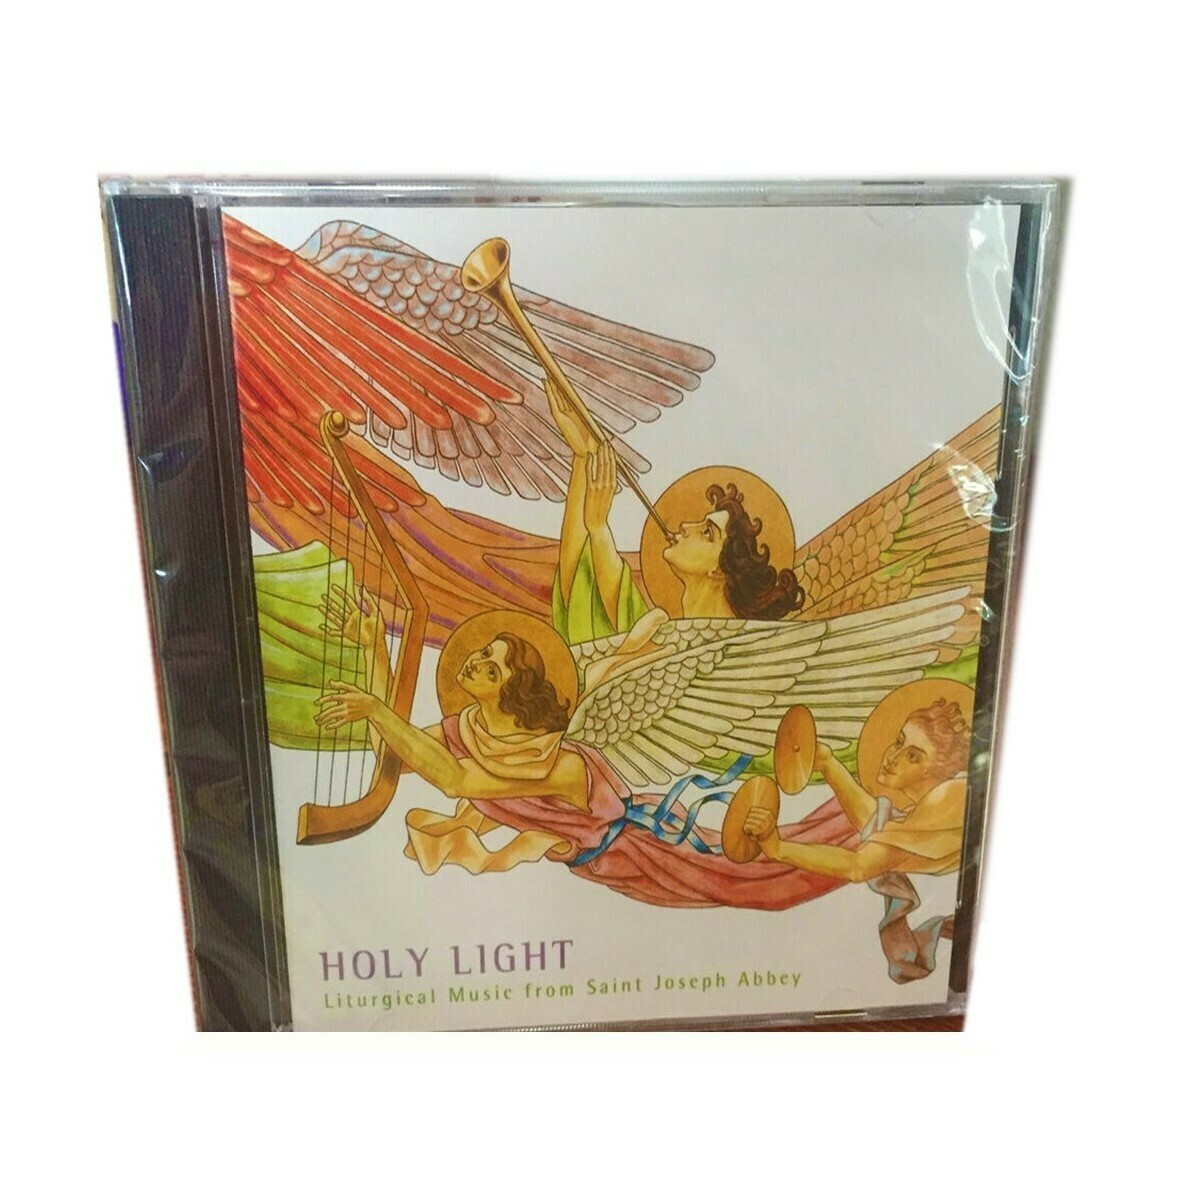 Holy Light - Liturgical Music From Saint Joseph Abbey